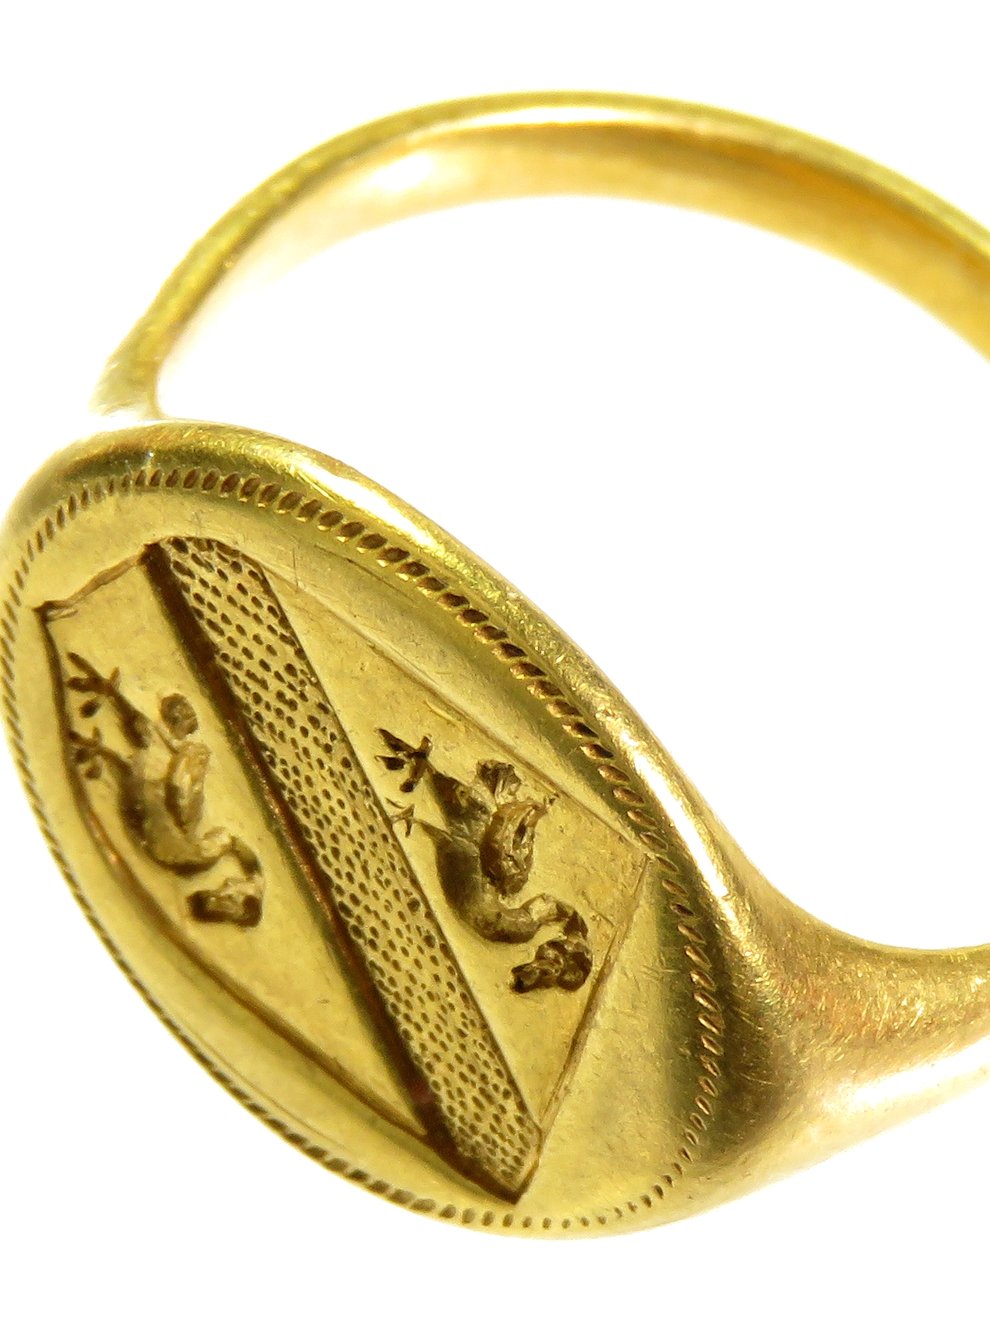 The Jenison signet ring (Hansons/PA)